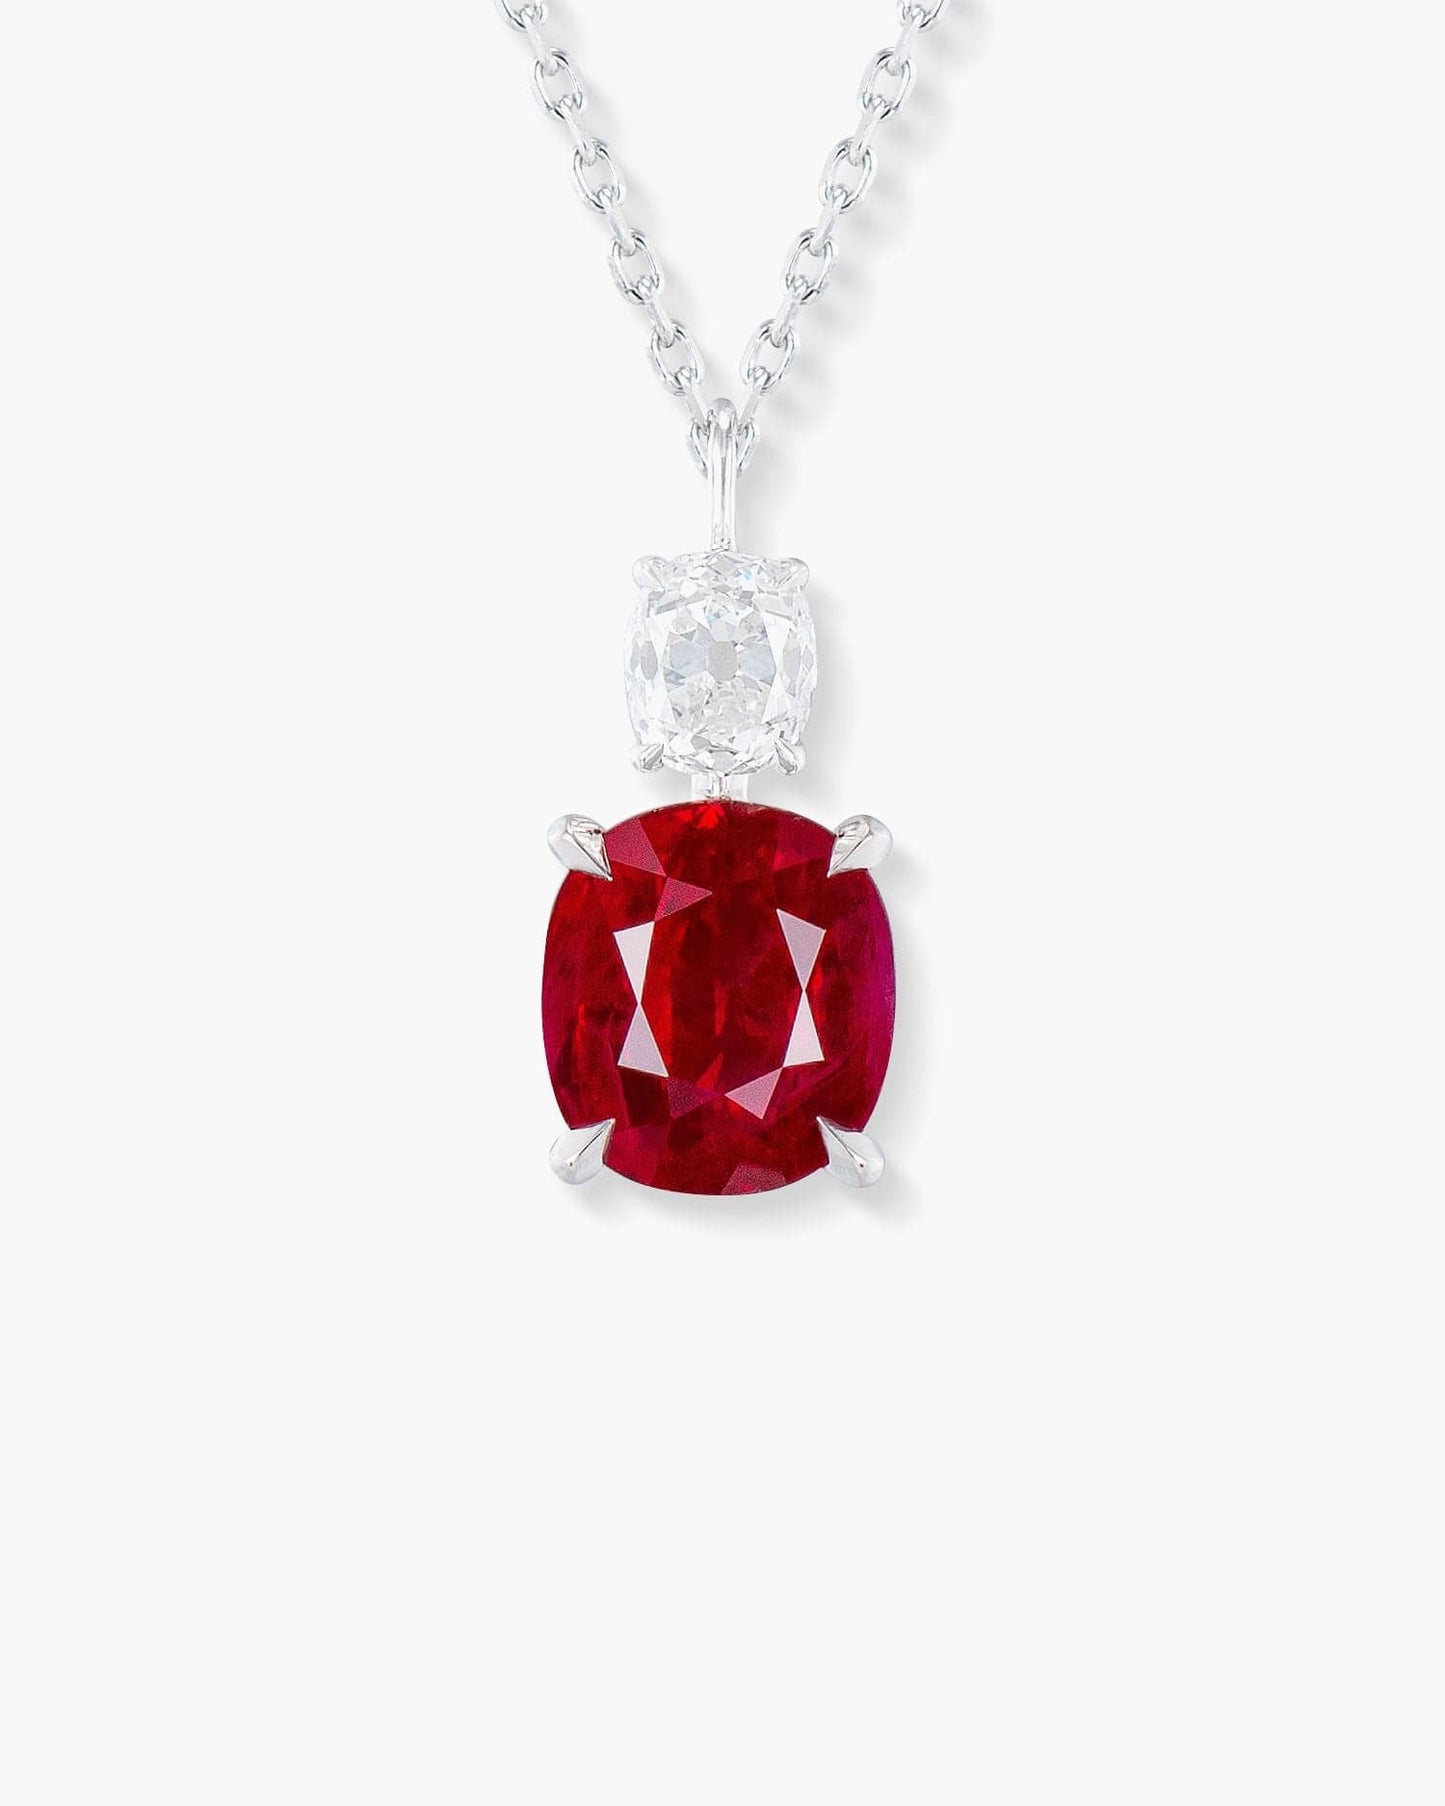 2.82 carat Cushion Cut Burmese Ruby and Diamond Pendant Necklace